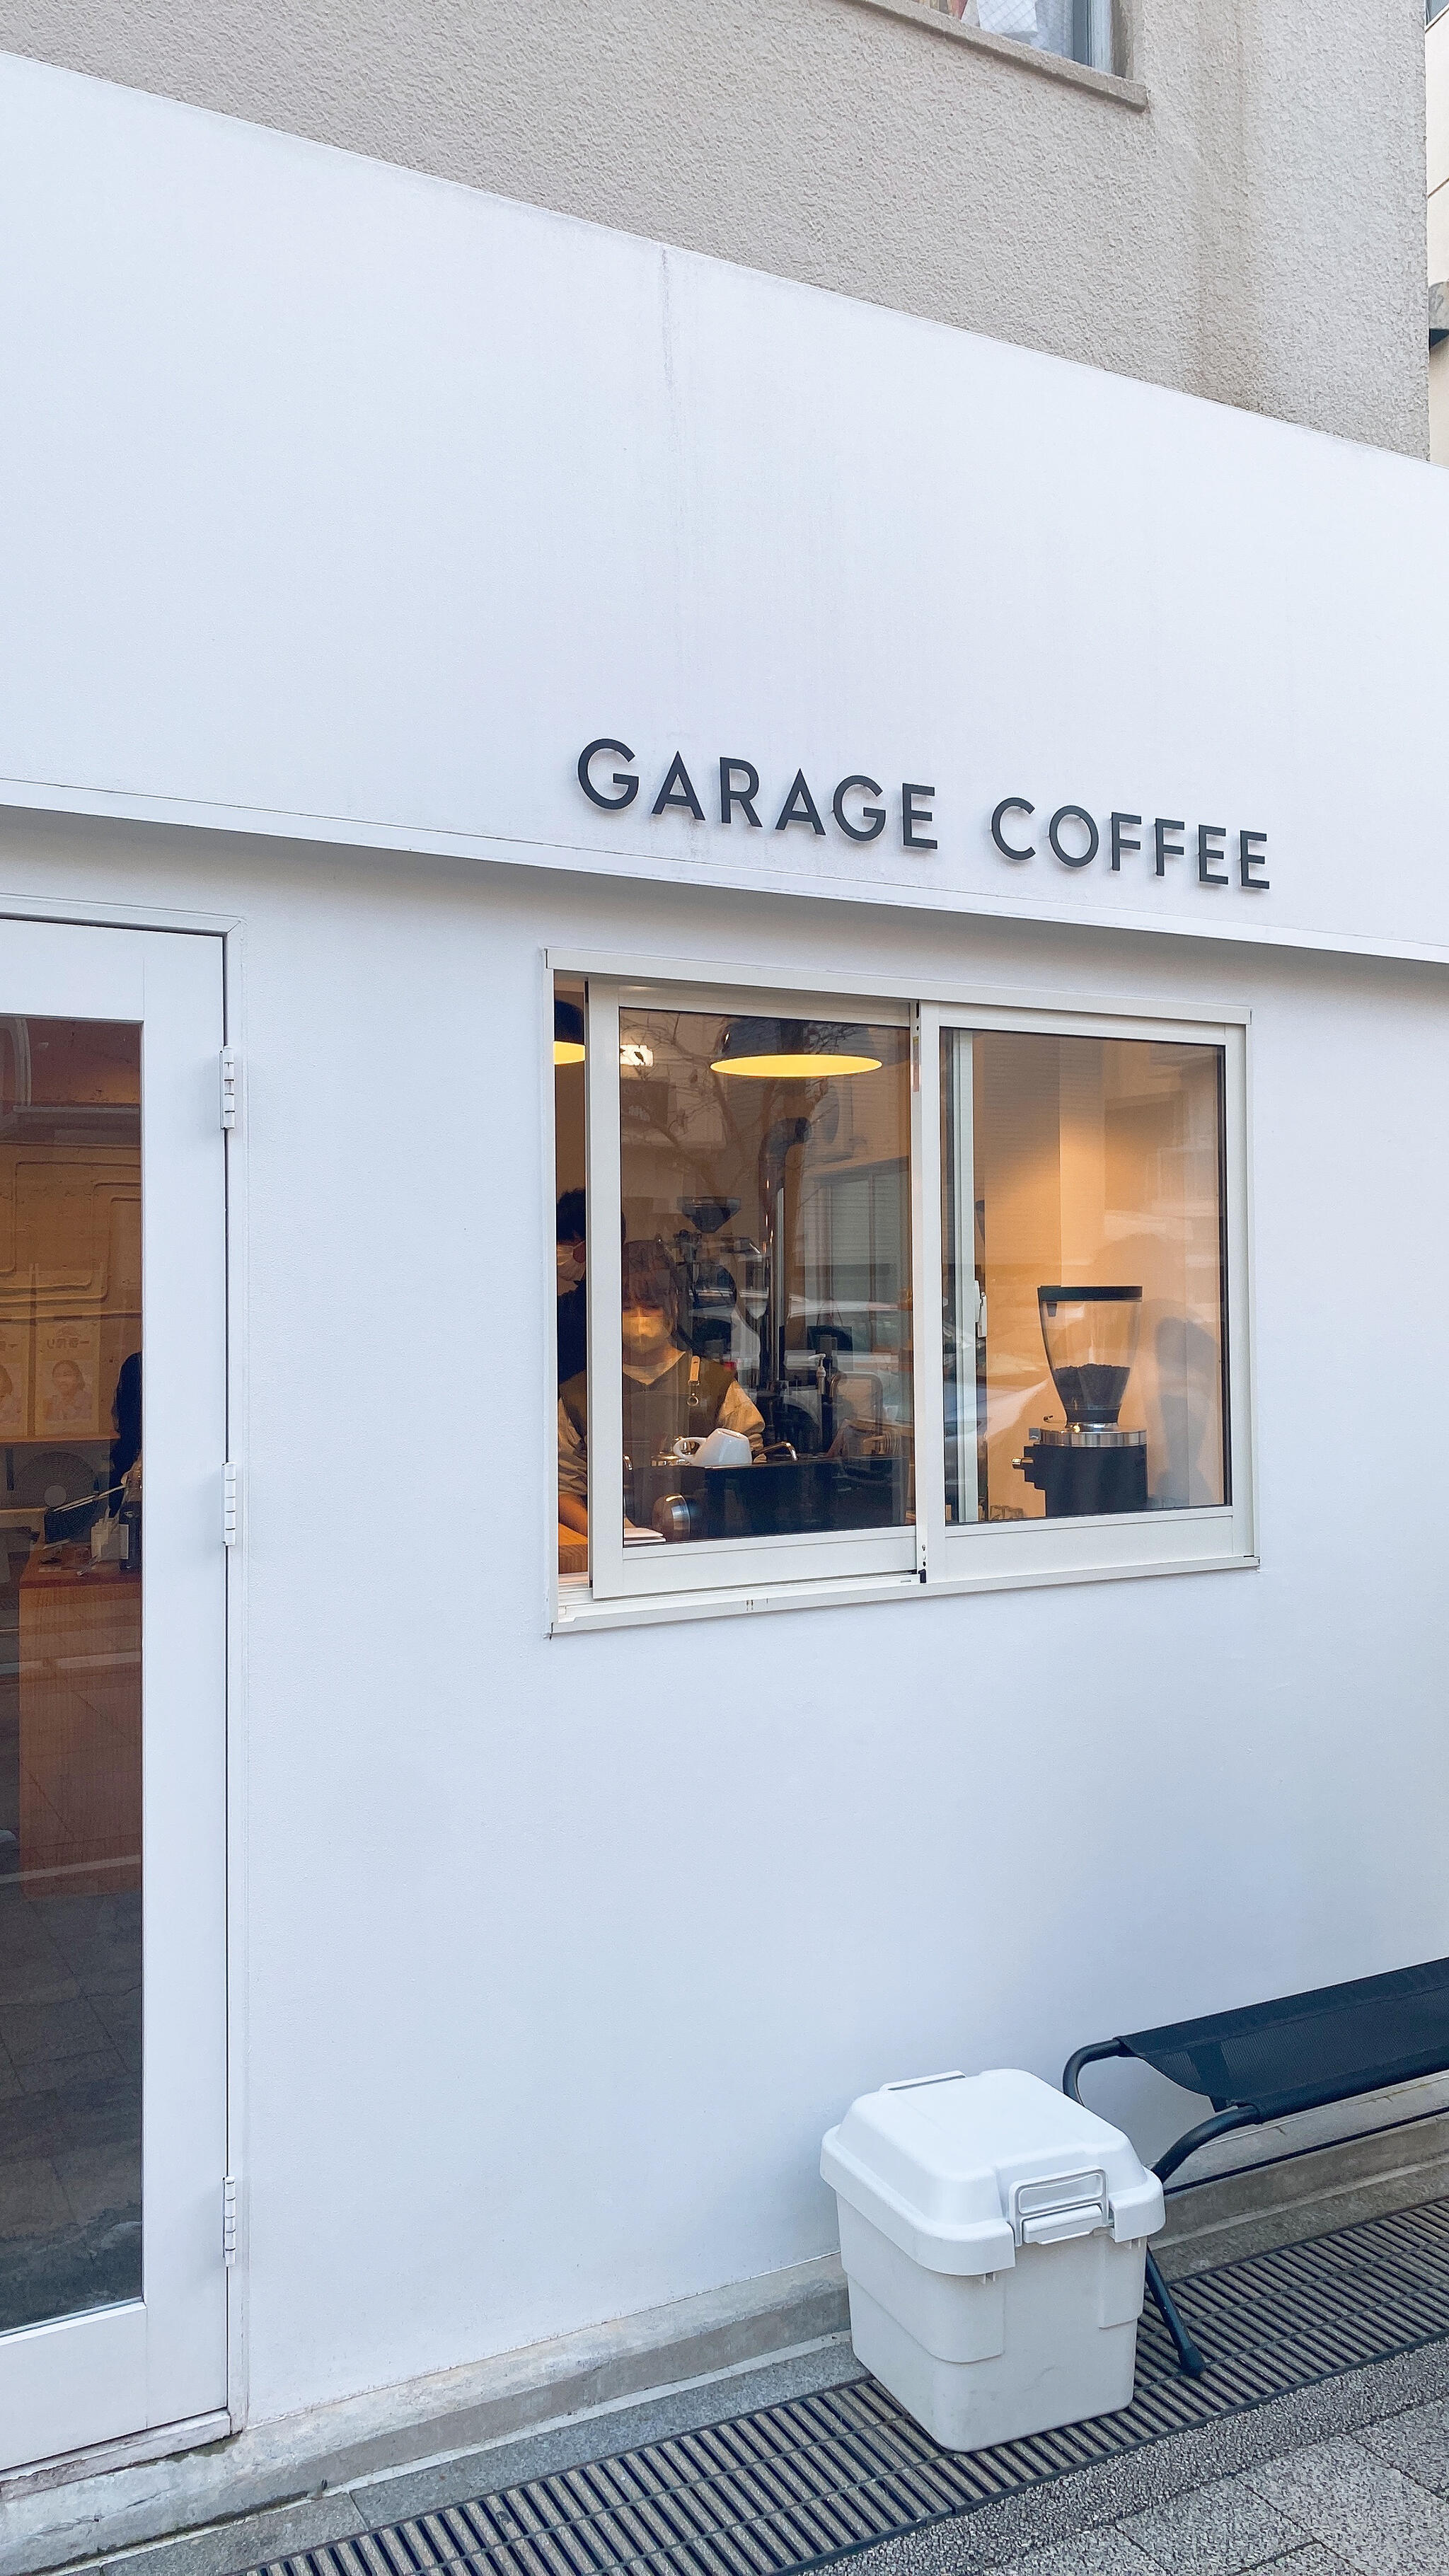 Garage Coffeeの代表写真2